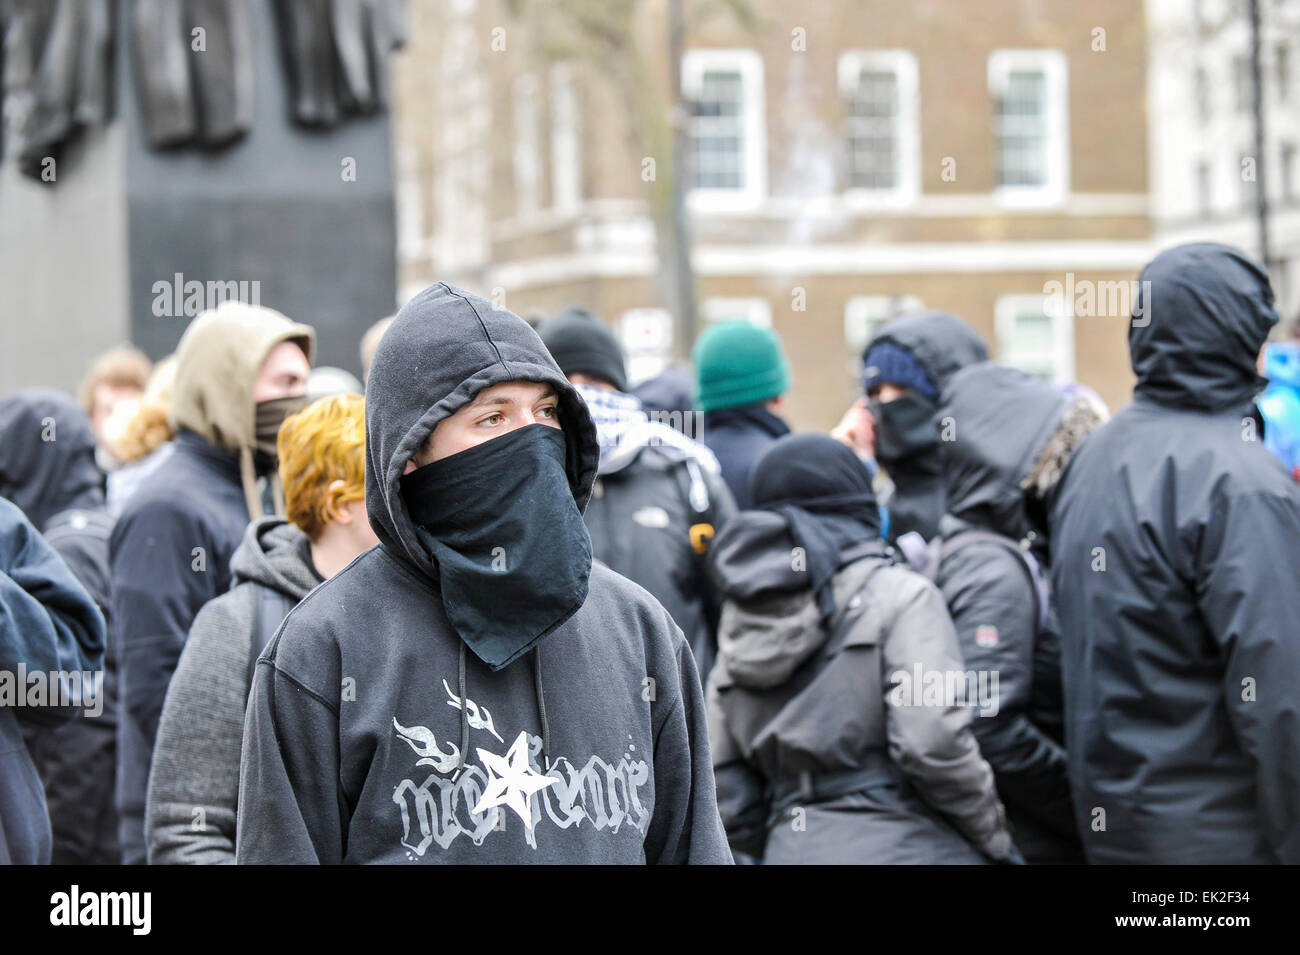 Black Bloc Anti-fascists demonstrating against Pergida in Whitehall. Stock Photo